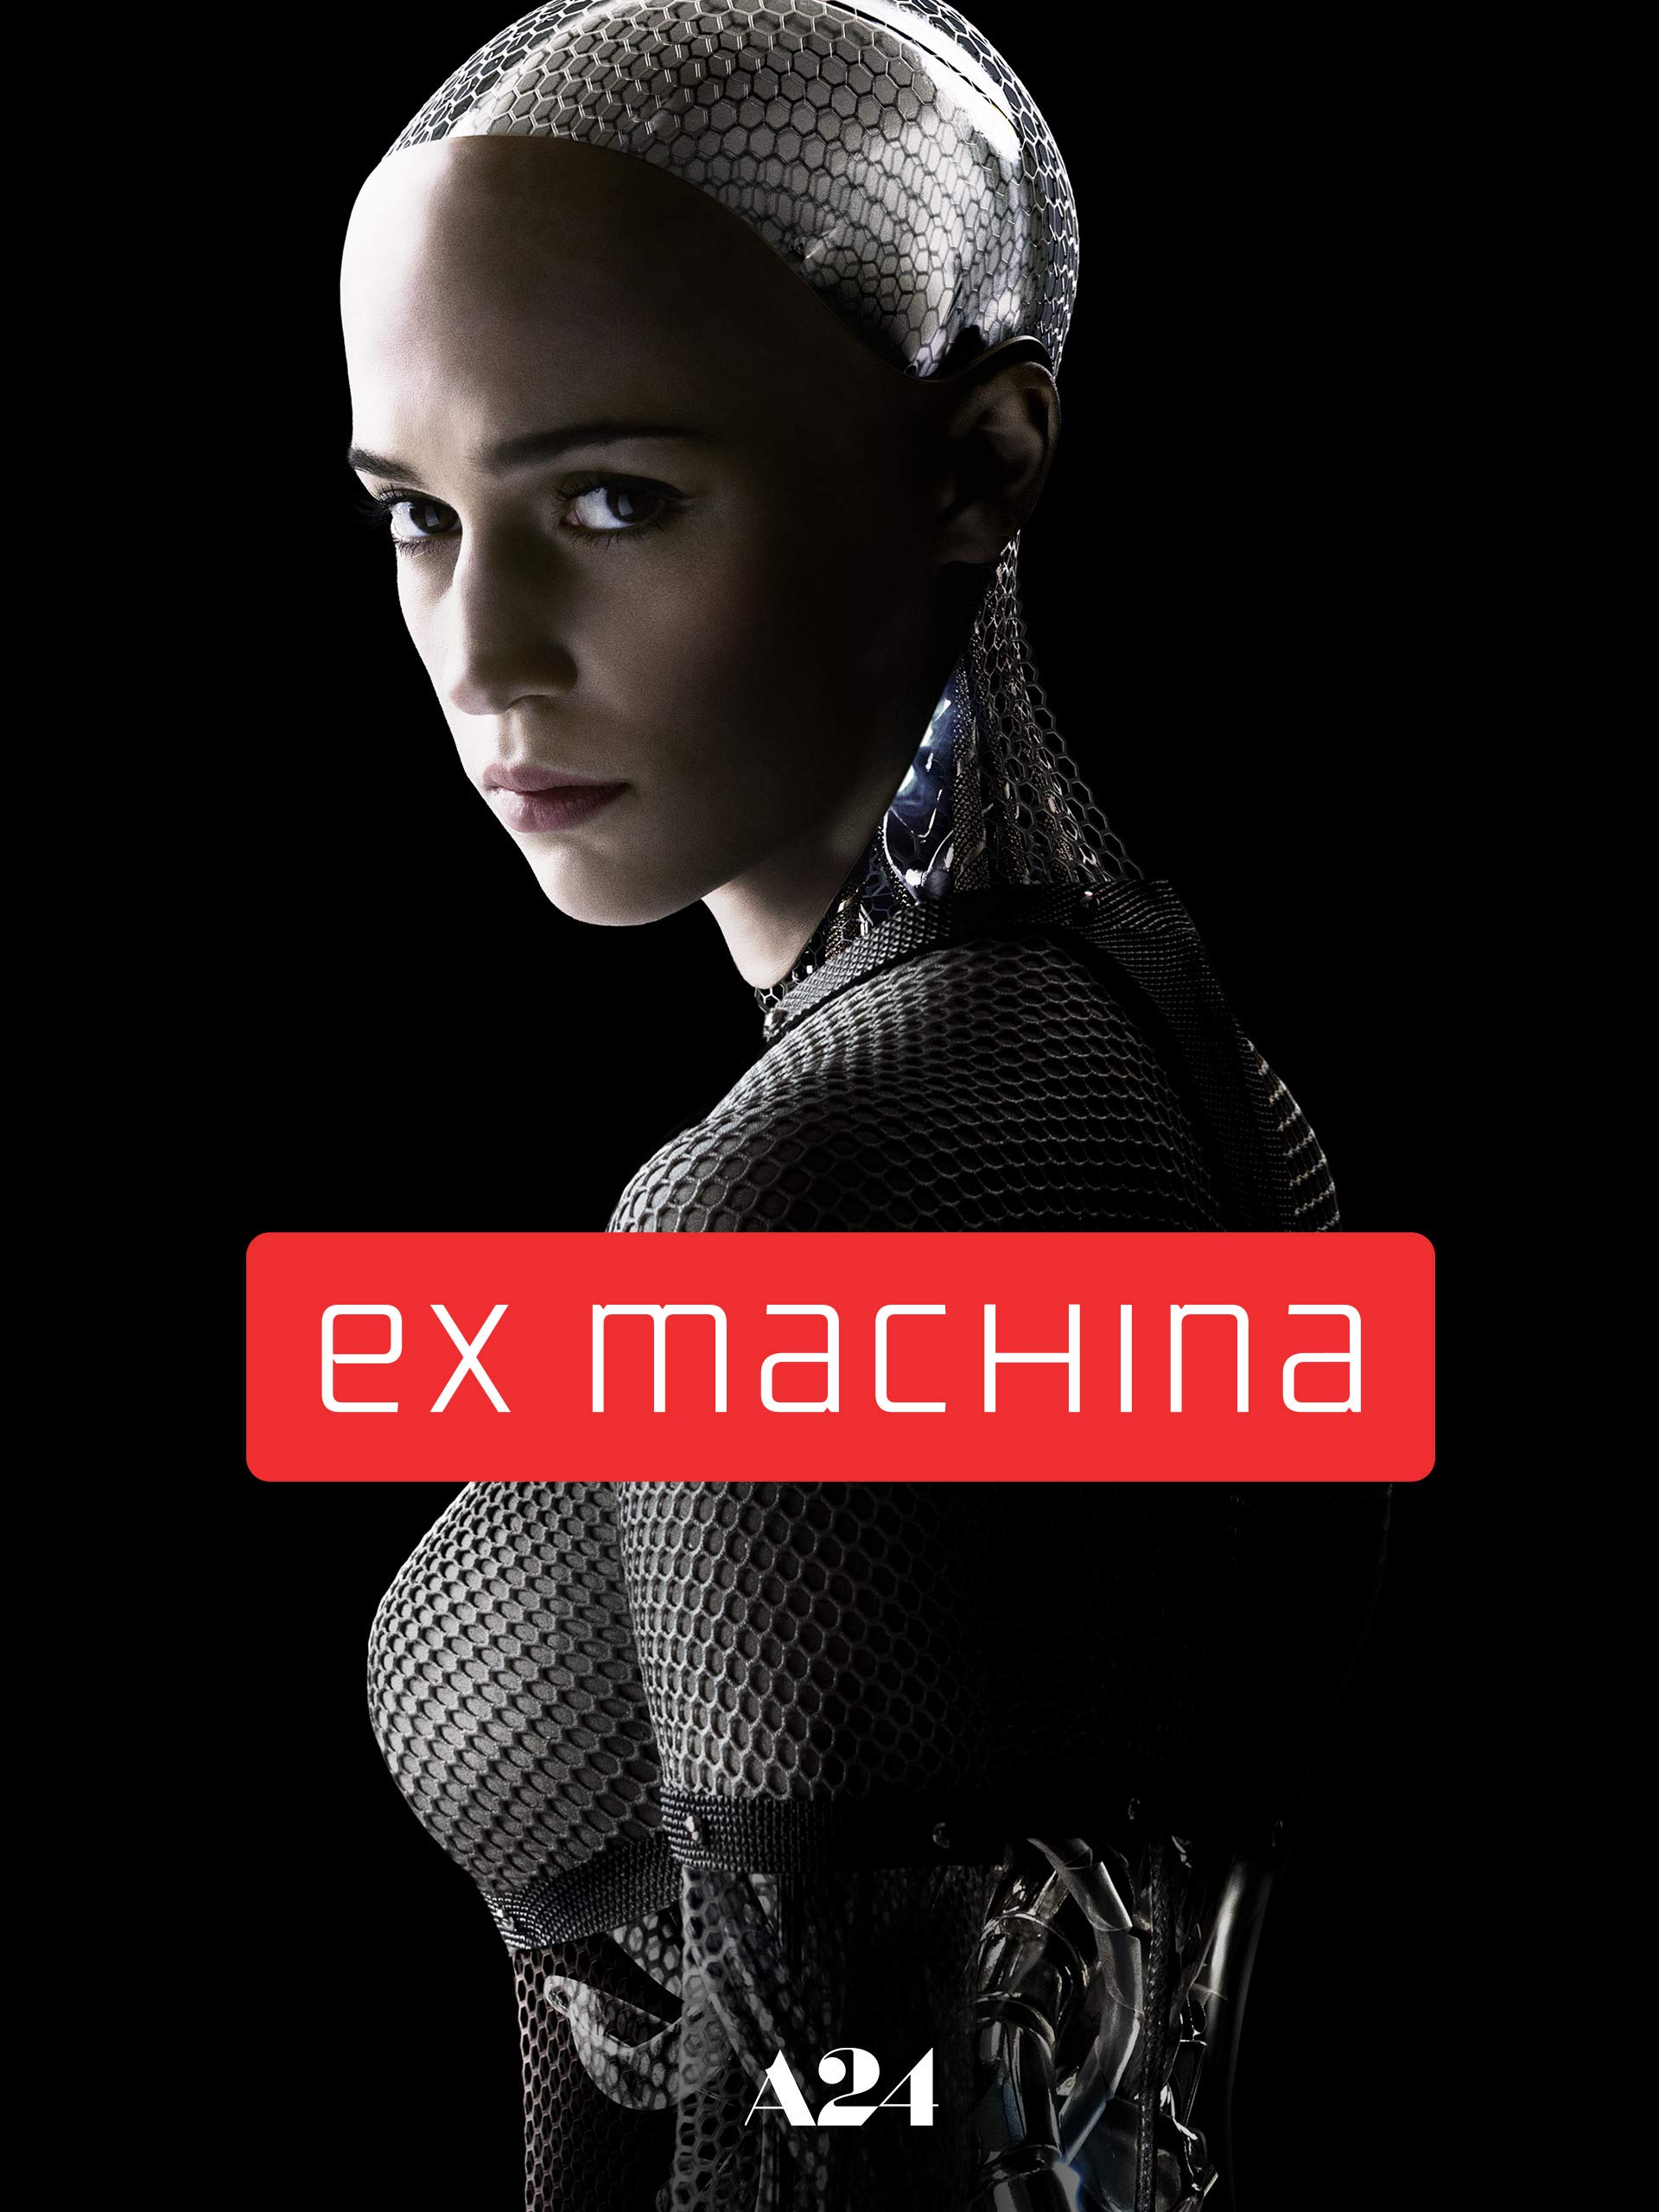 An image about Ex Machina